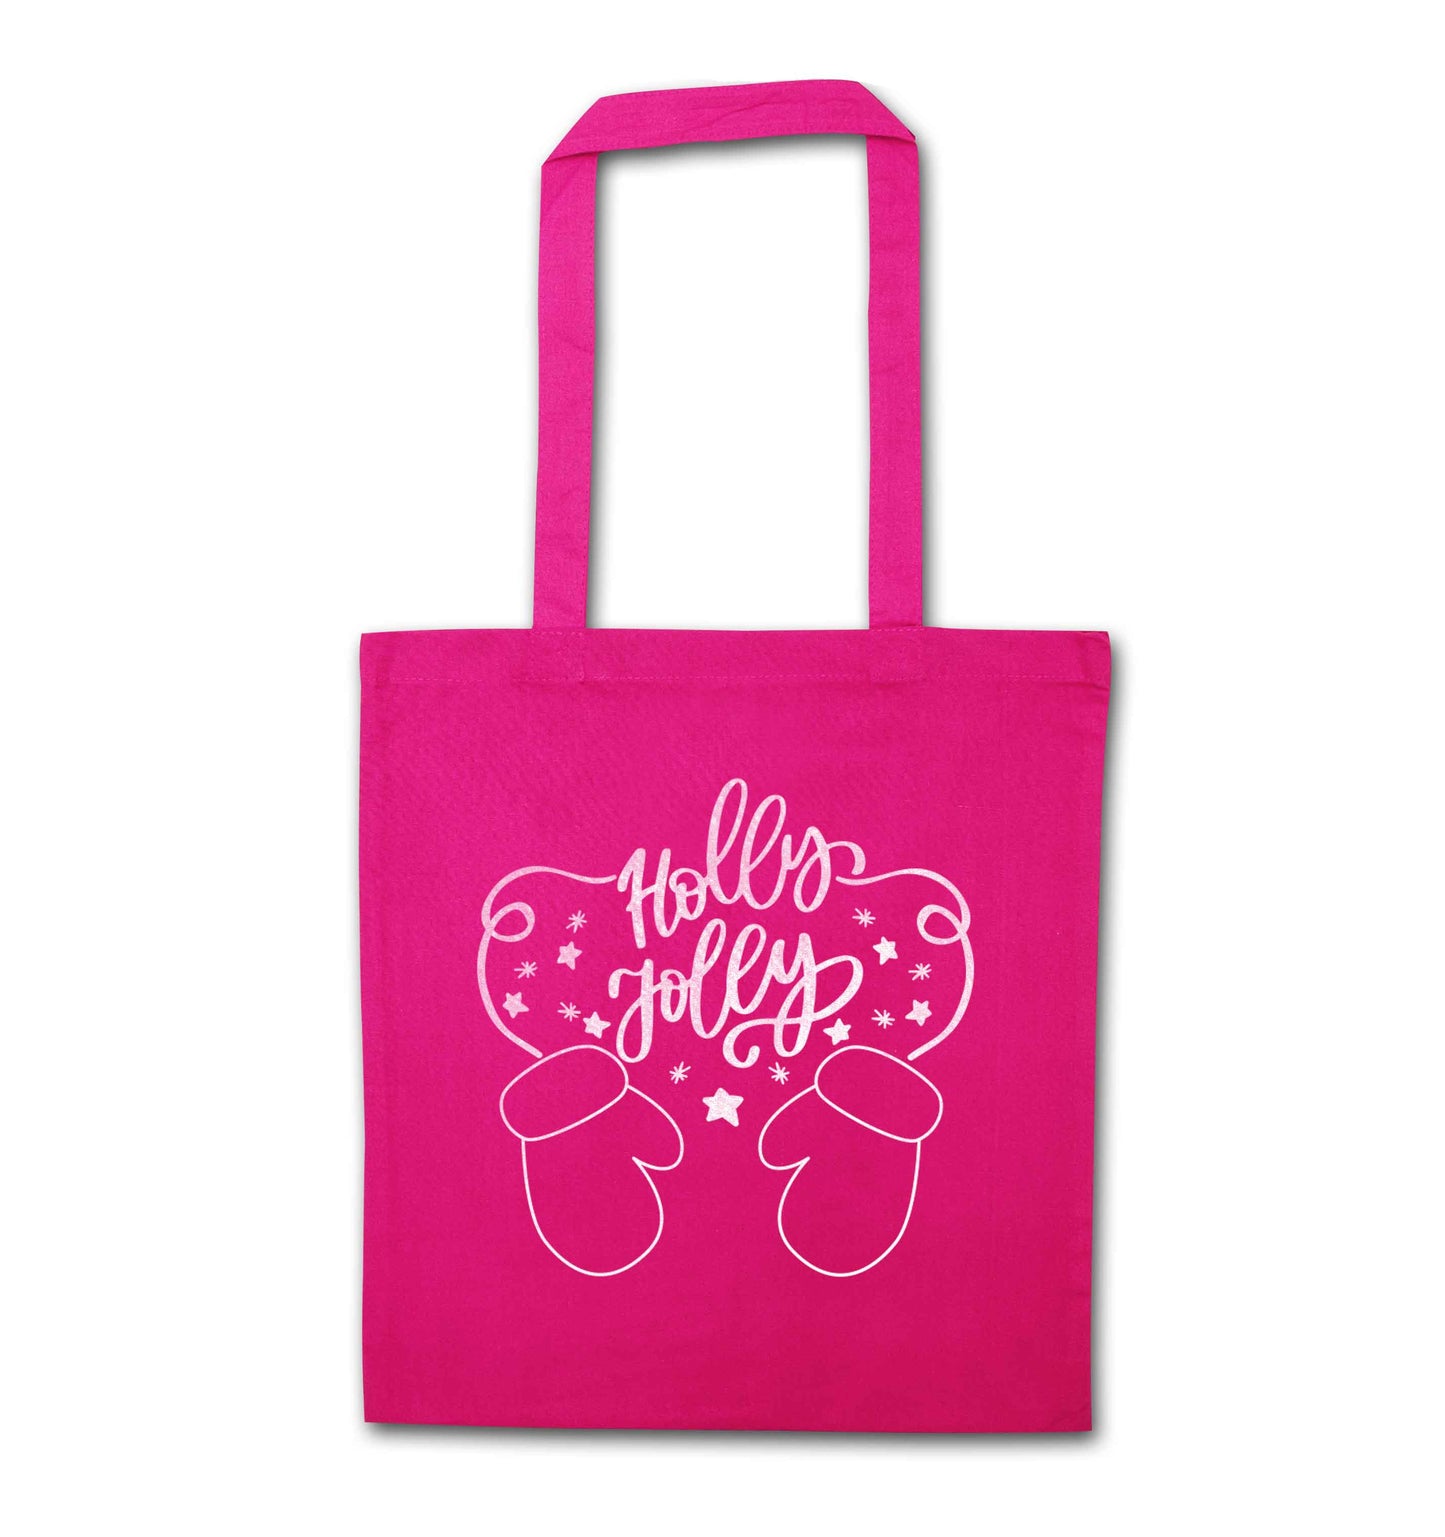 Holly jolly pink tote bag